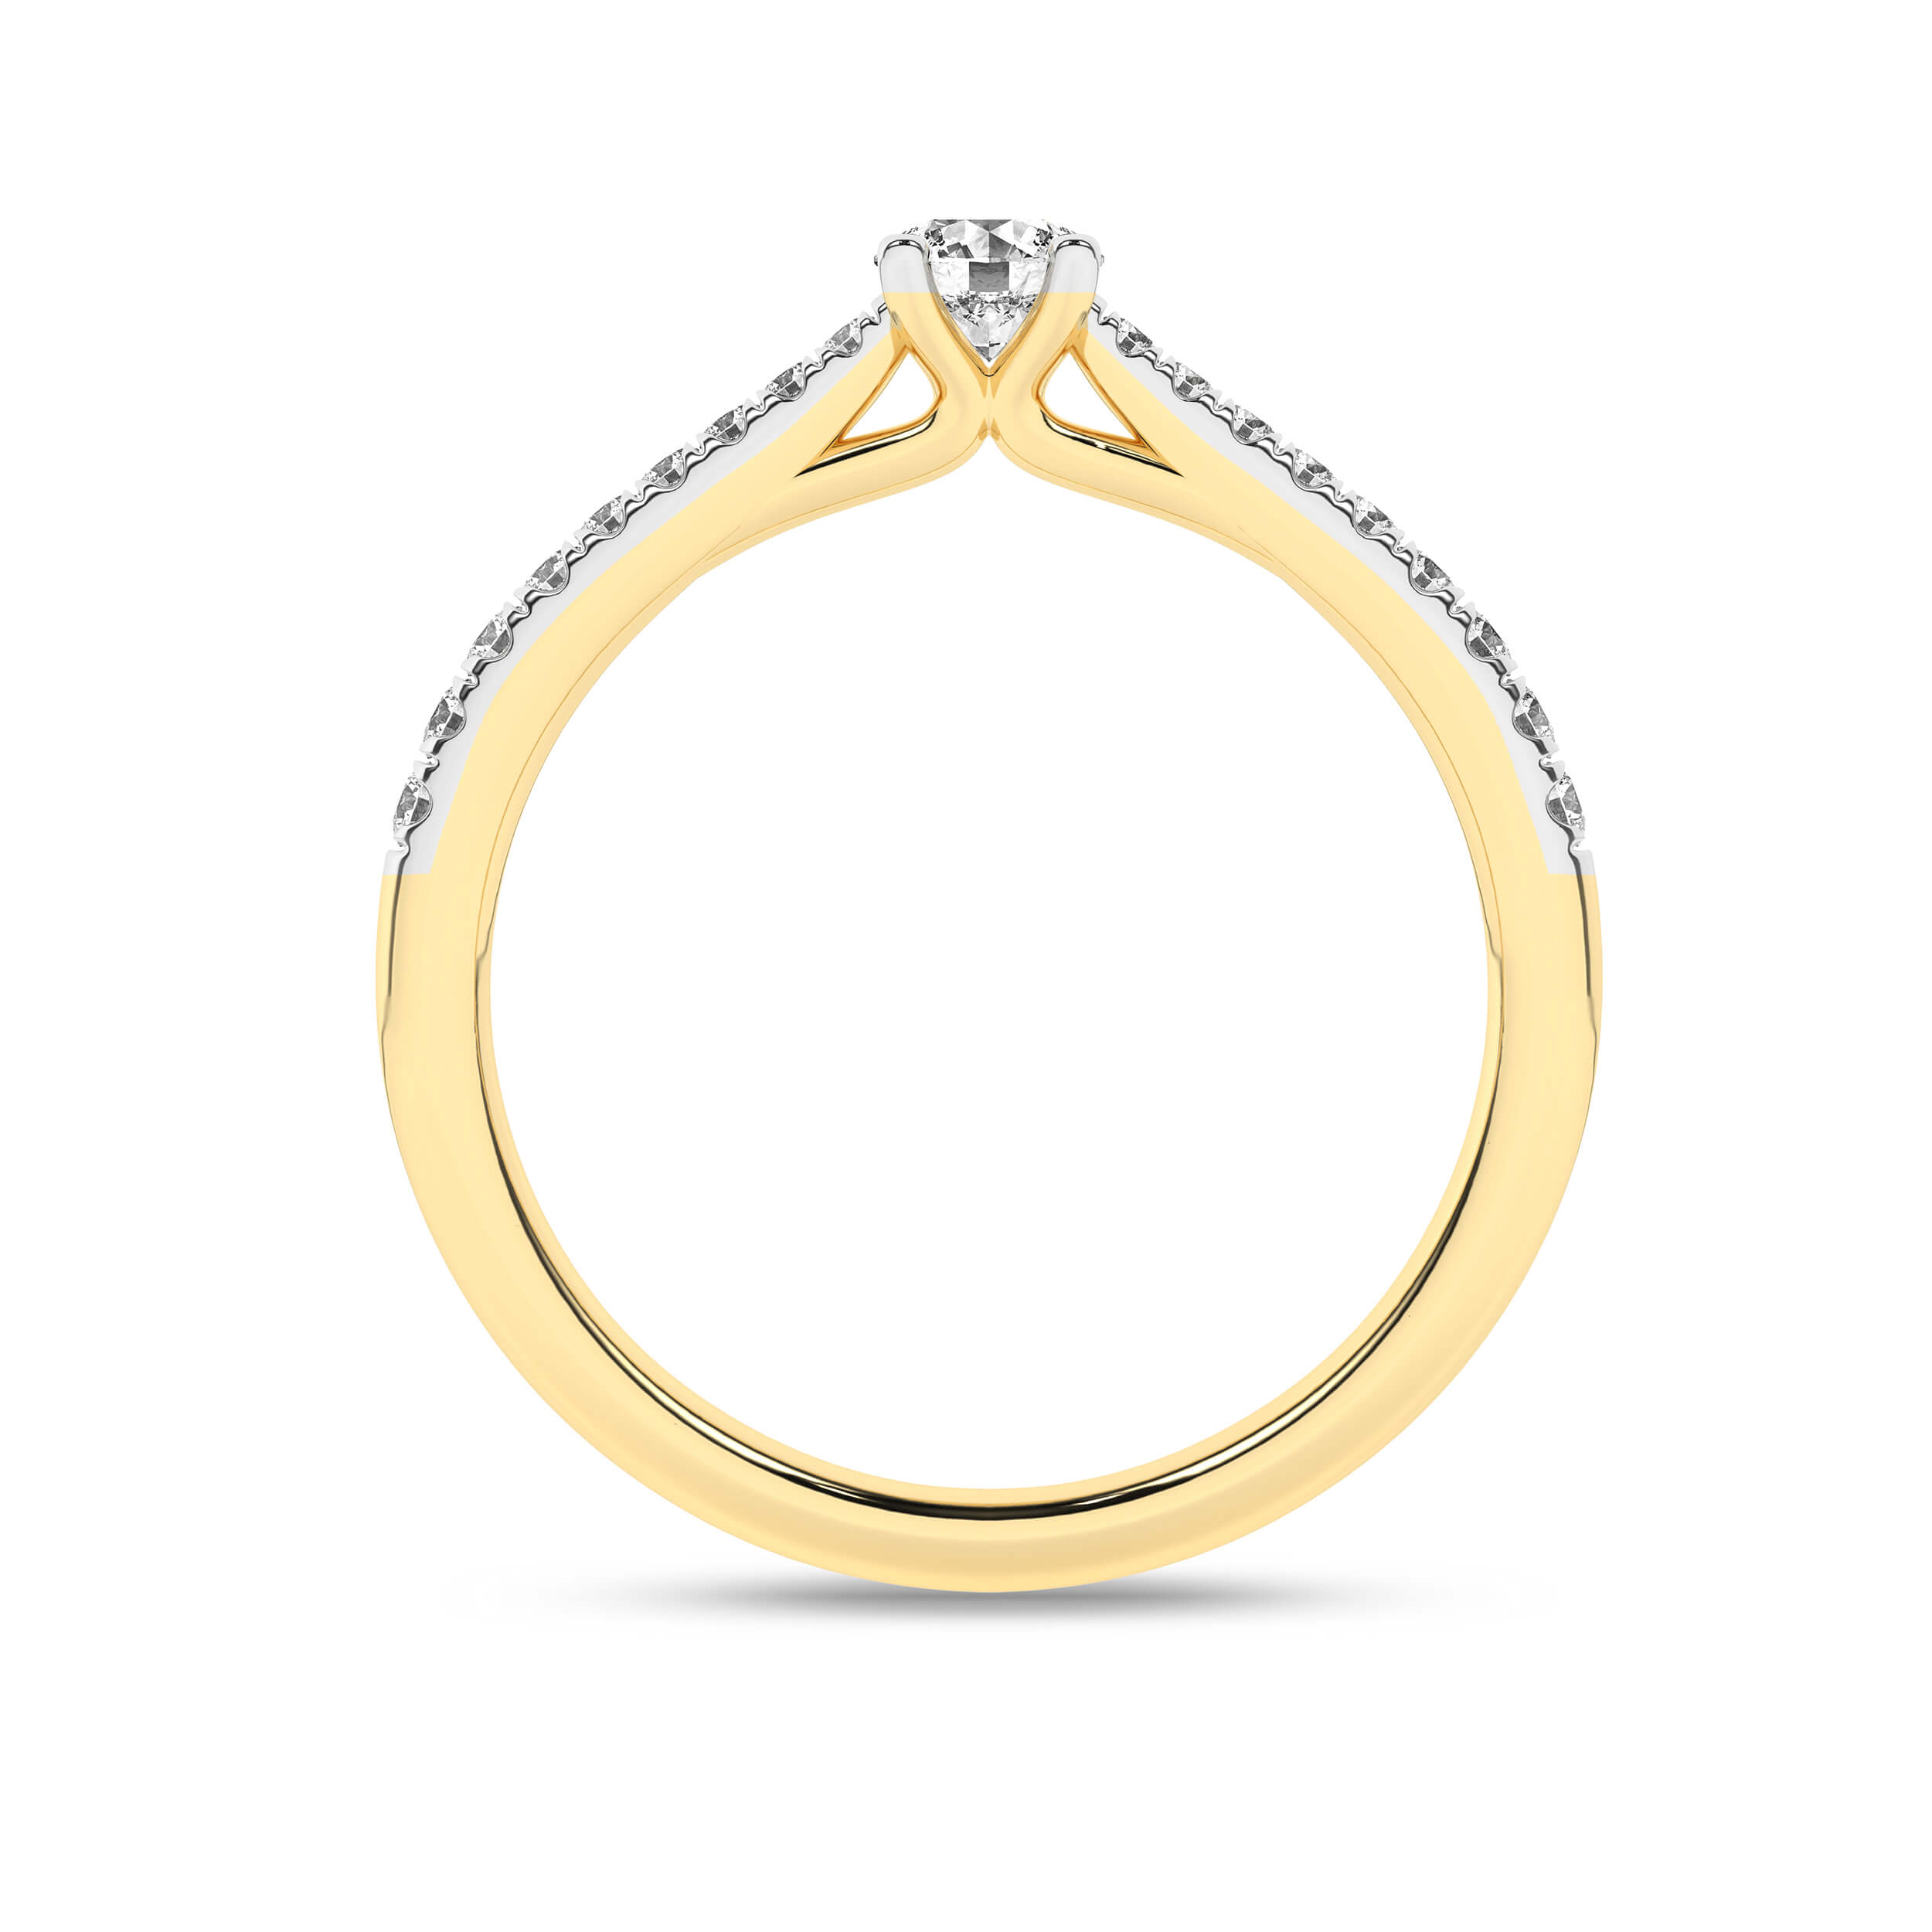 Inel de logodna din Aur Galben 14K cu Diamante 0.33Ct, articol RB21737EG, previzualizare foto 1